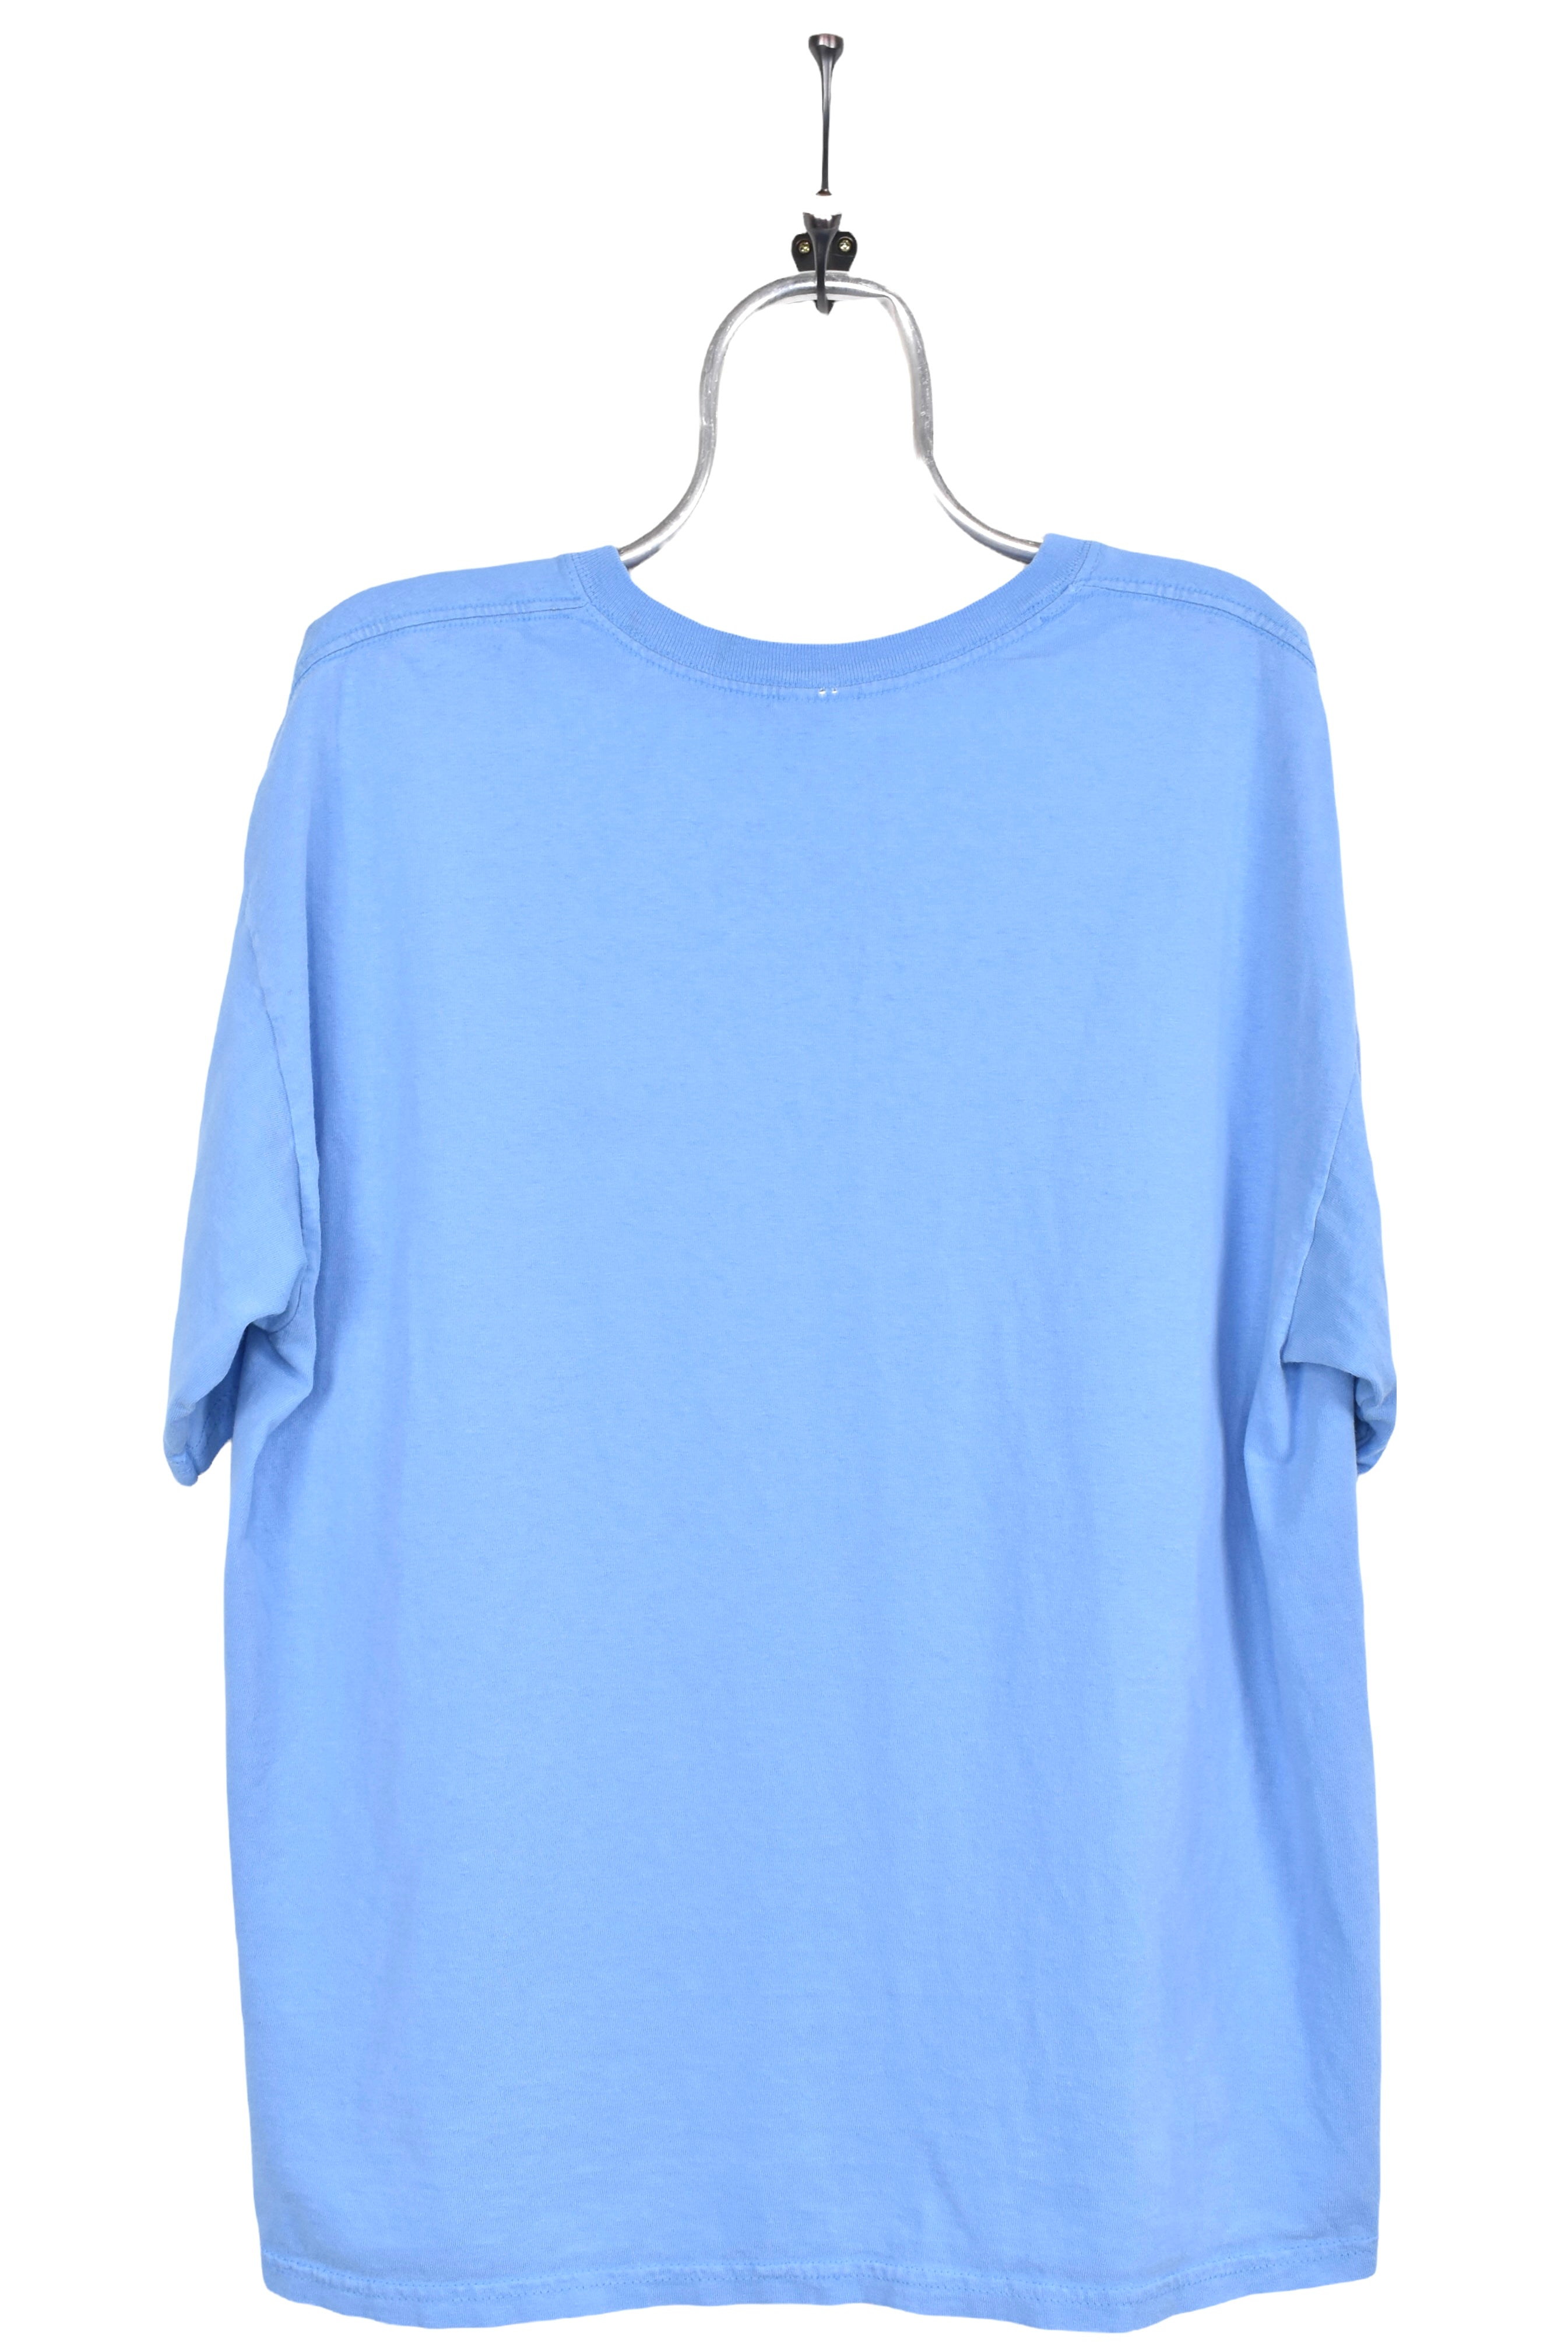 Vintage Becker football shirt, college blue graphic tee - AU XL COLLEGE